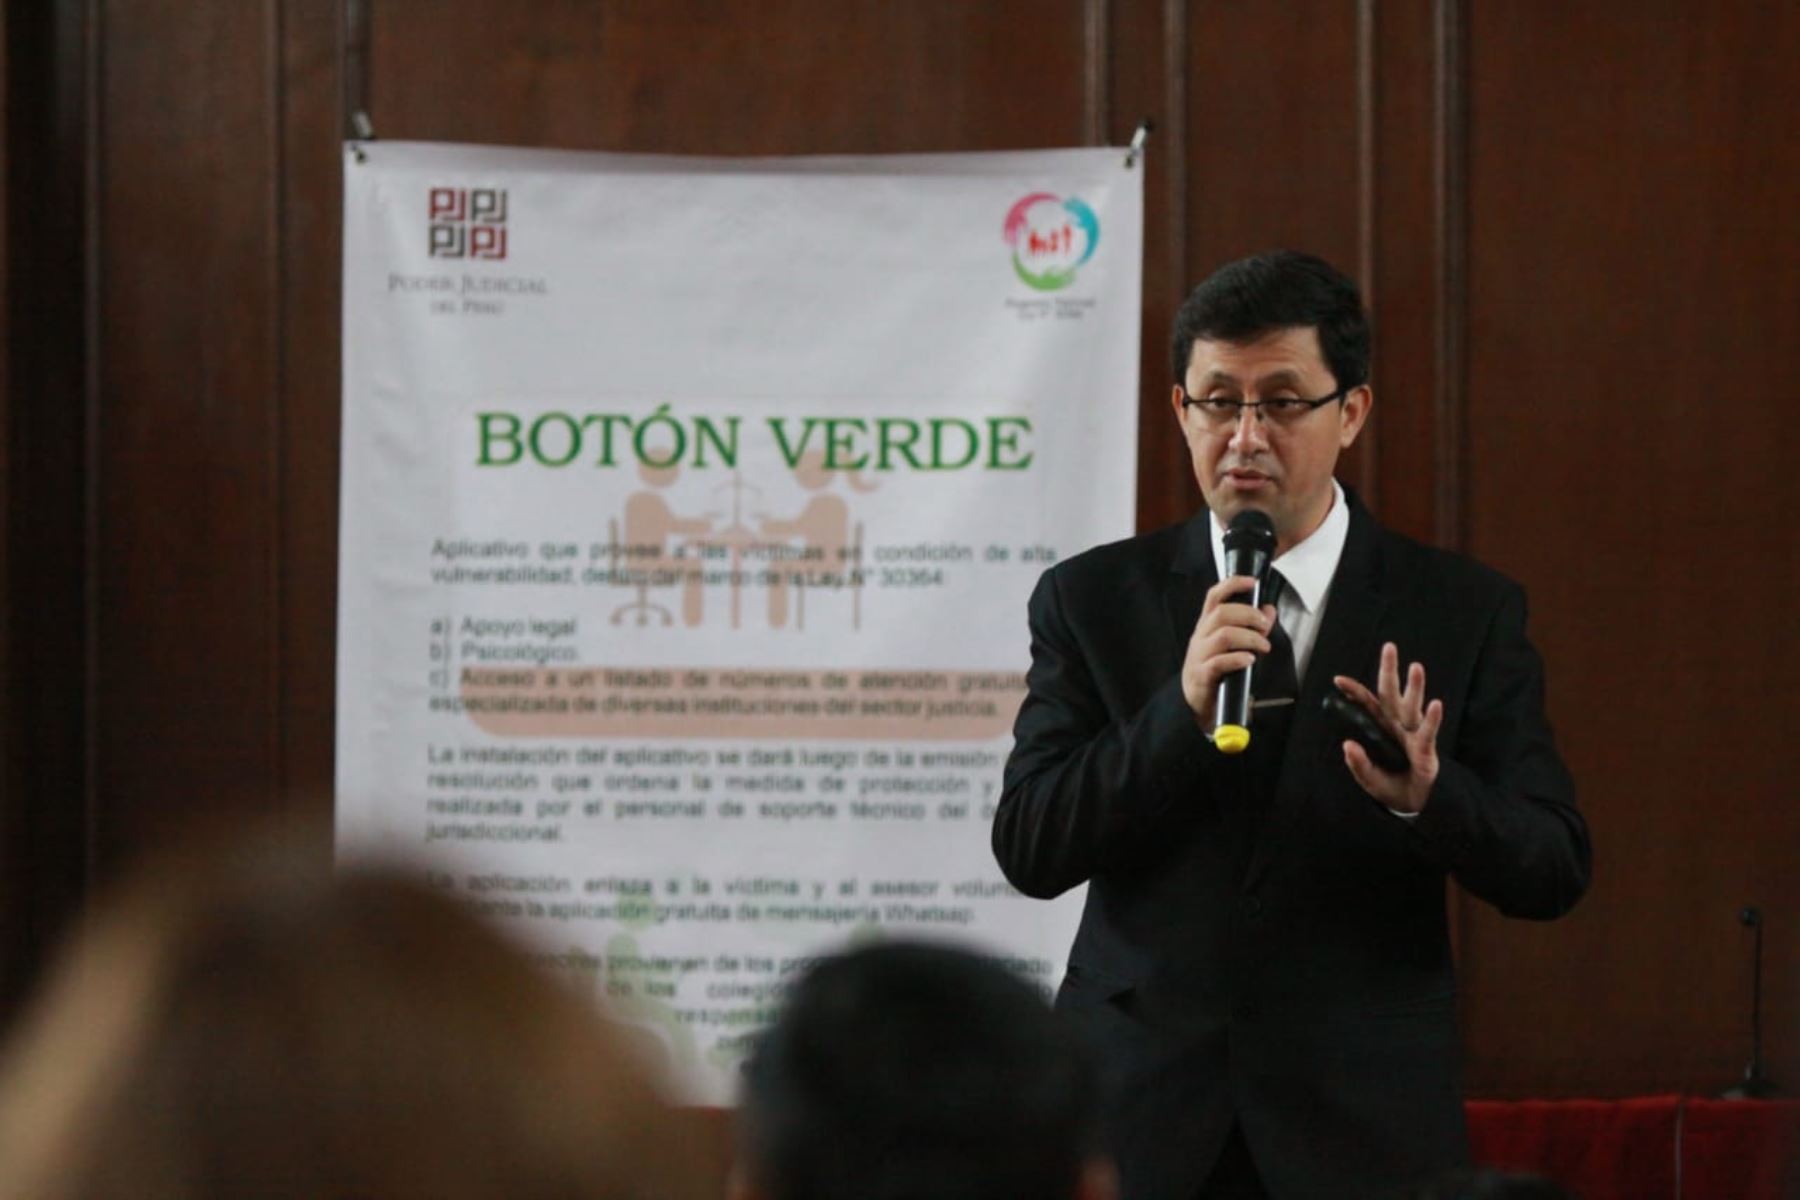 Poder Judicial capacita abogados en uso del botón verde, para apoyo a víctimas de violencia familiar.